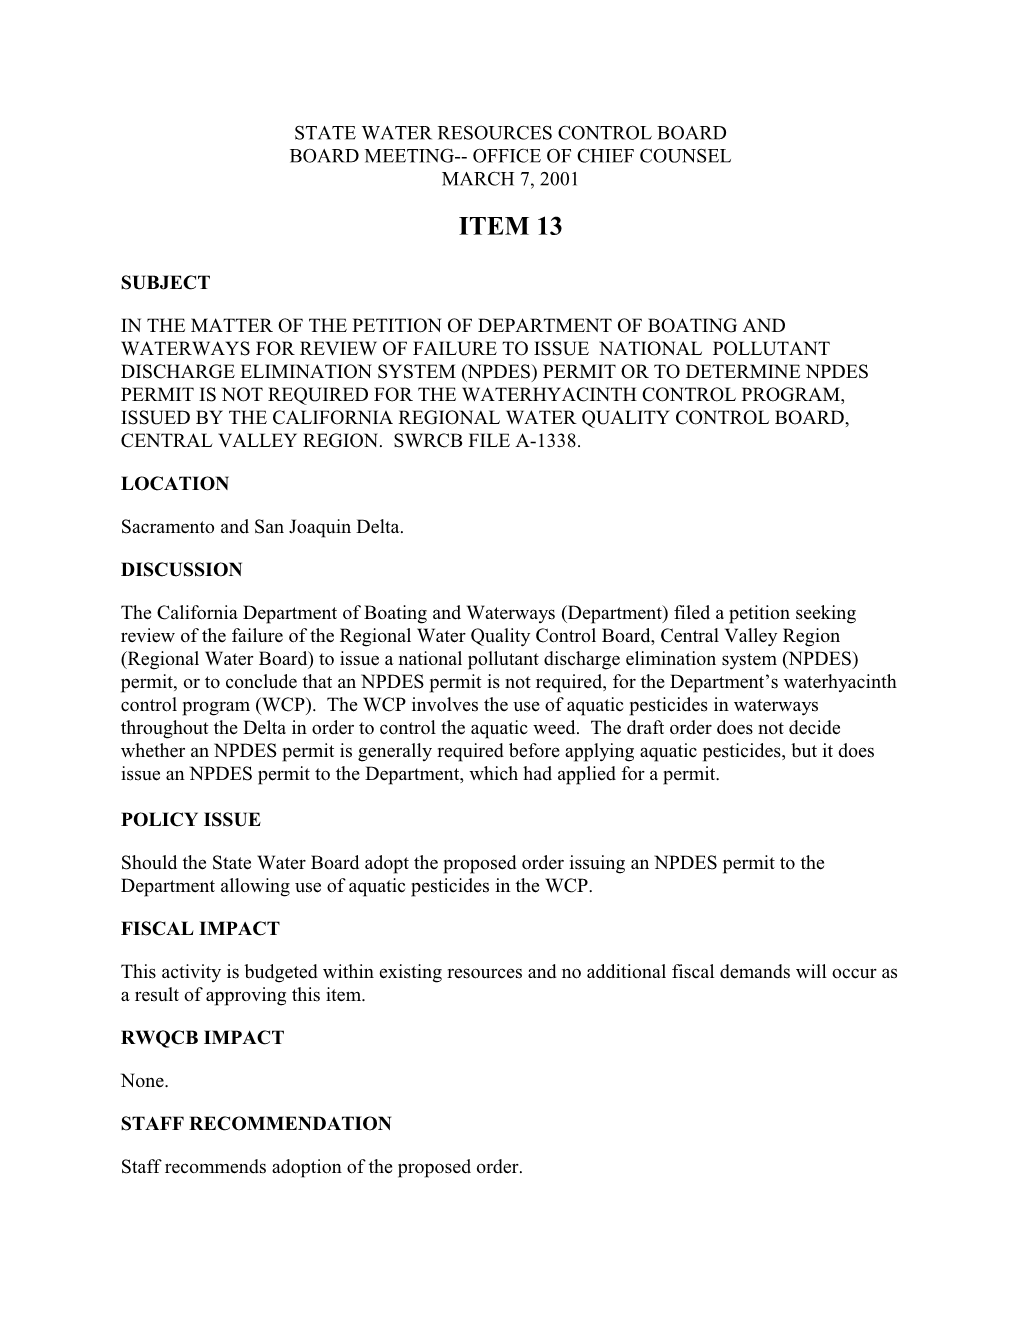 Petition of Boating & Waterways/Wtr Hyacinth